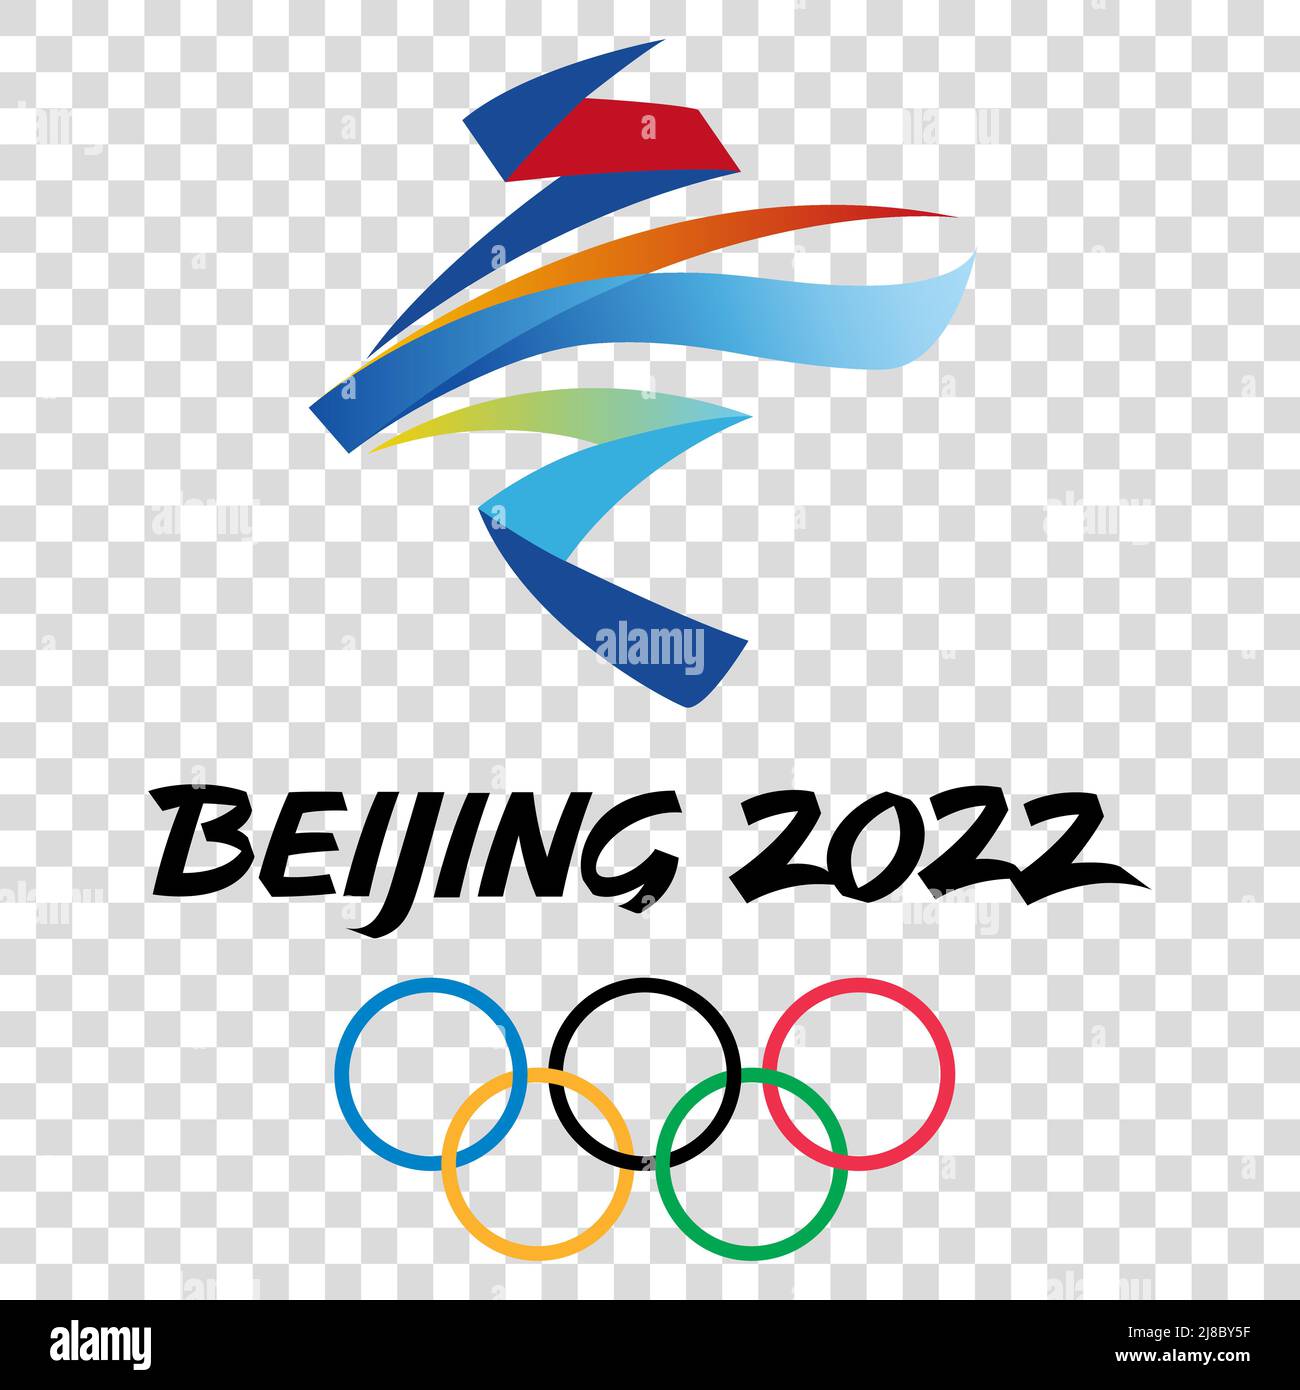 Vinnytsia, Ukraine - May 13, 2022: Beijing 2022 Olympics Games Logo Stock Vector